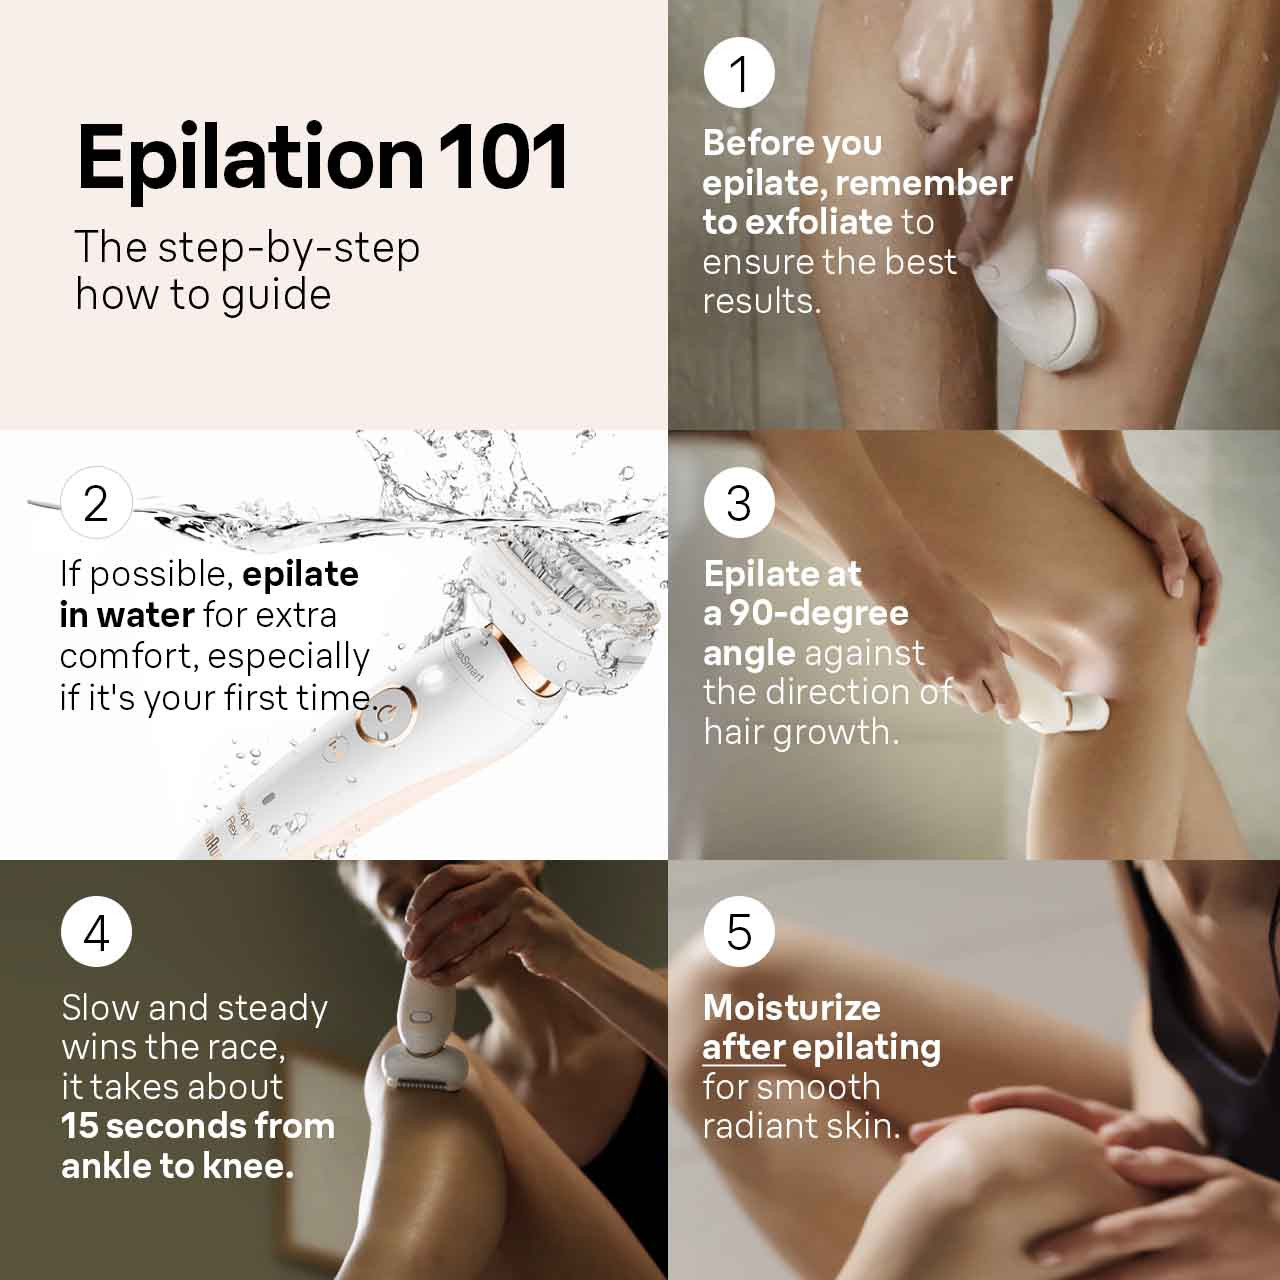 Braun 9-961 Silk-Epil 9 Skinspa 9-961V 5-In-1 Epilator Exfoliation & Skin  Care System : : Health & Personal Care